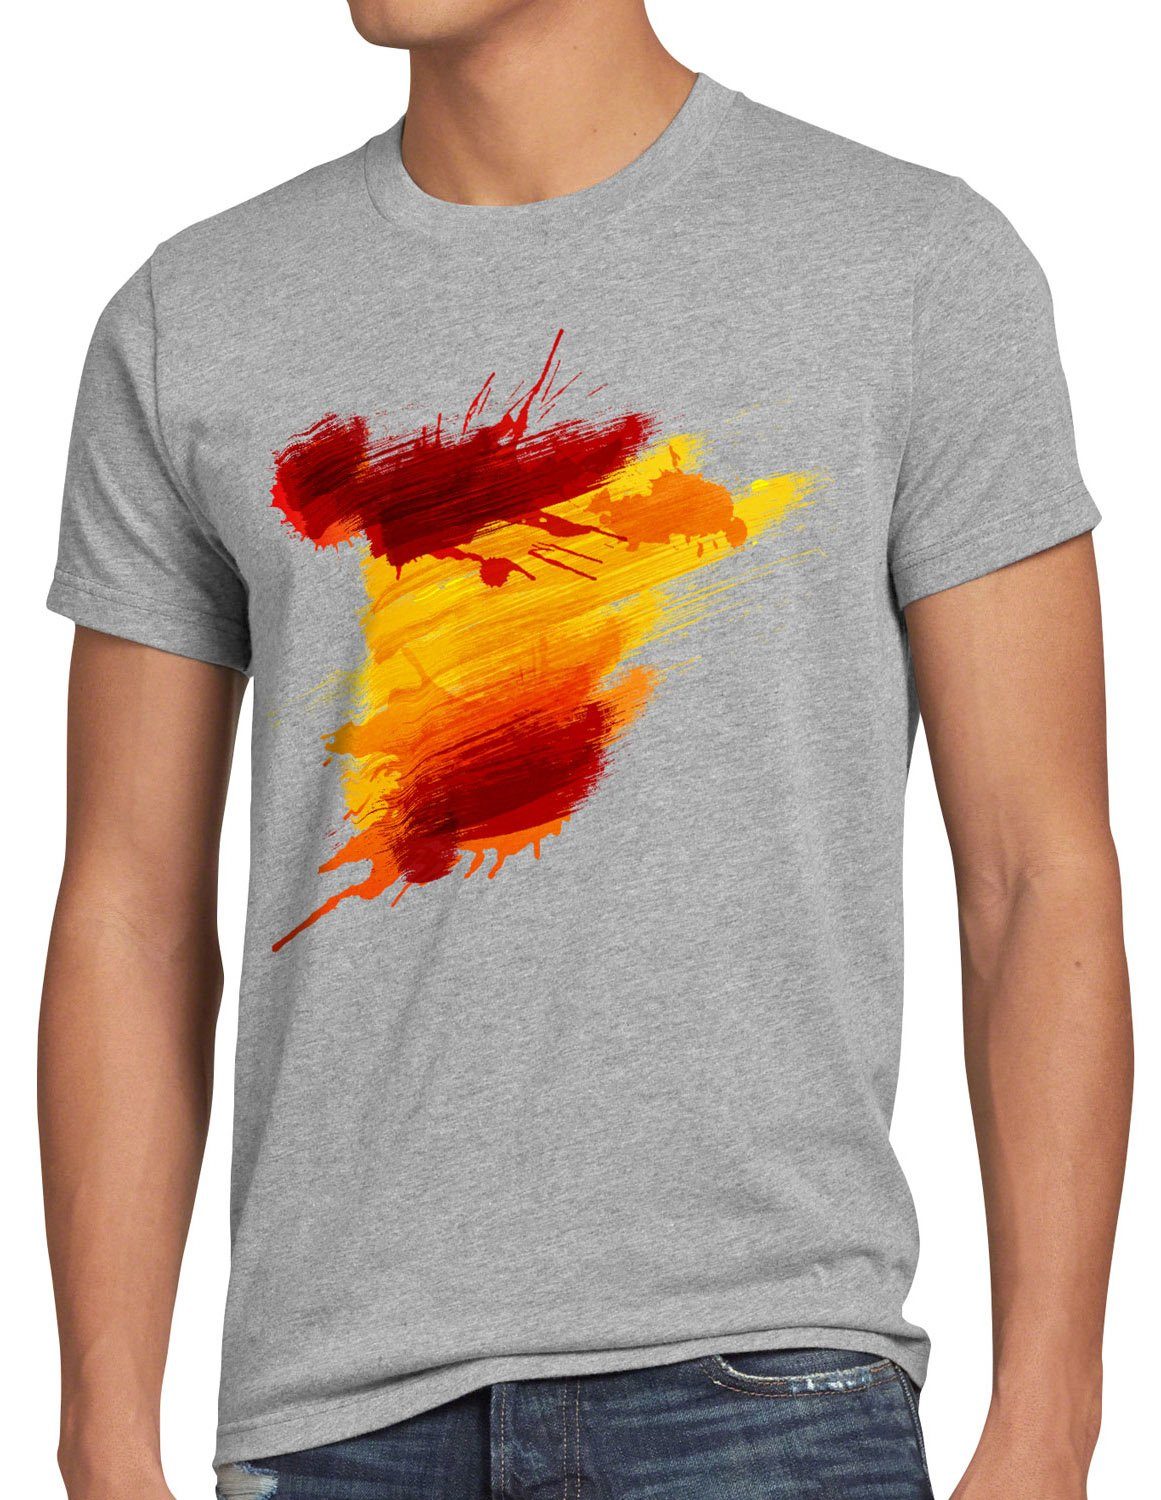 style3 Print-Shirt Herren T-Shirt Flagge Spanien Fußball Sport Spain WM EM Fahne grau meliert